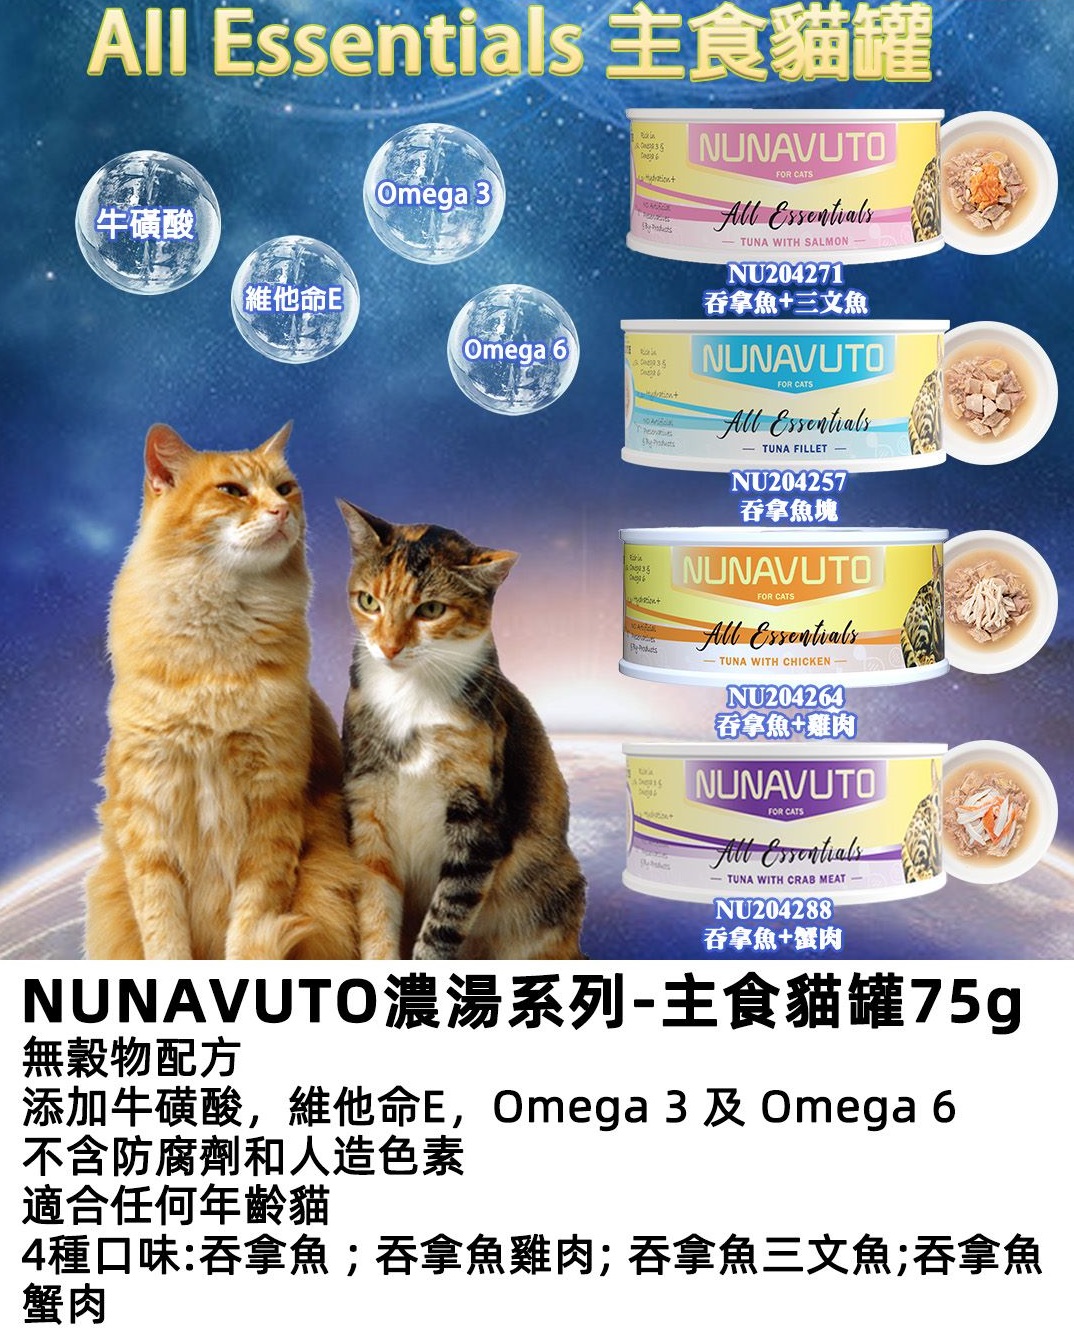 nunavuto-all-essential-cat-can-cut.jpg